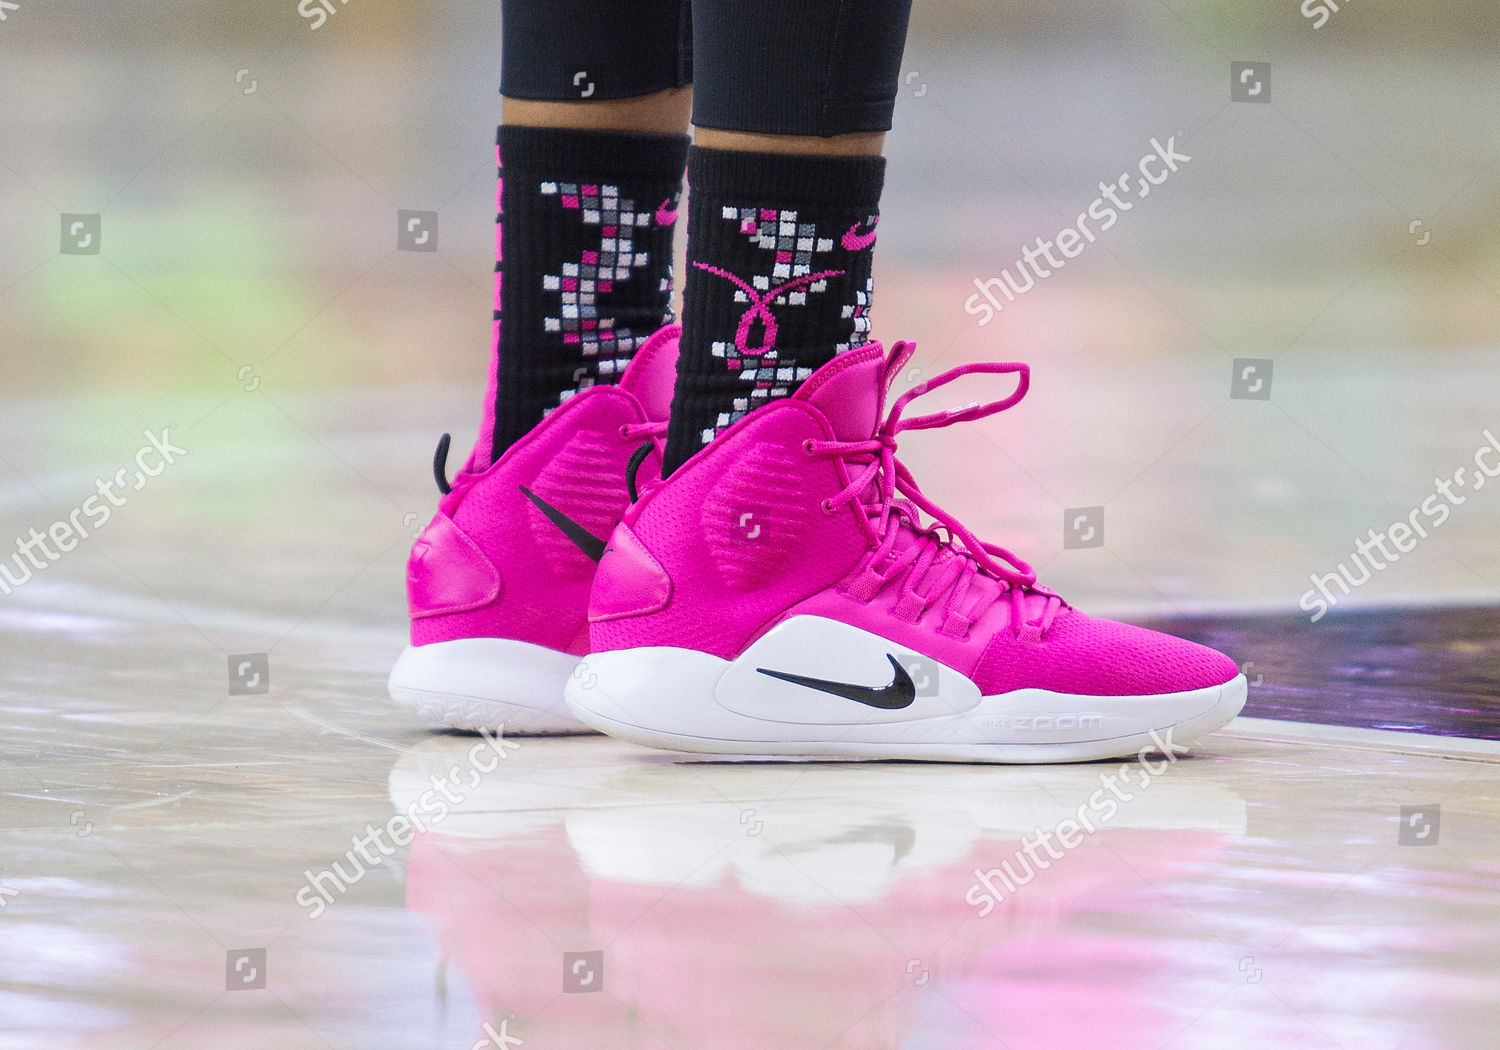 ncaa basketball pink shoes 2019